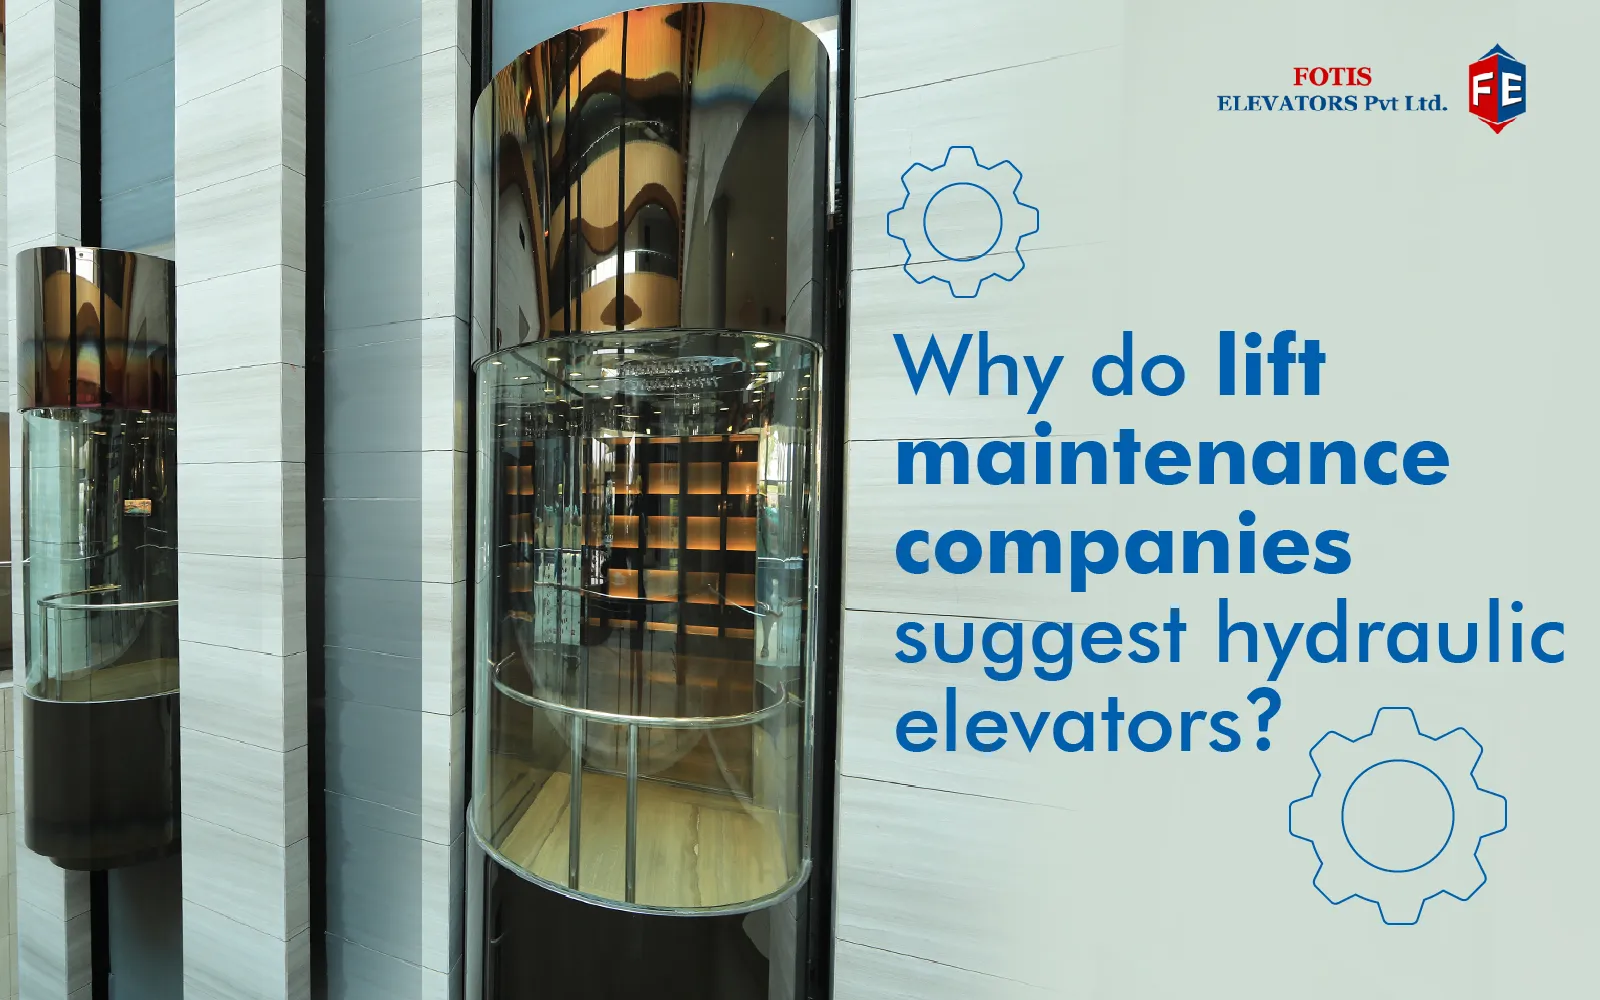 Why do lift maintenance companies suggest hydraulic elevators?